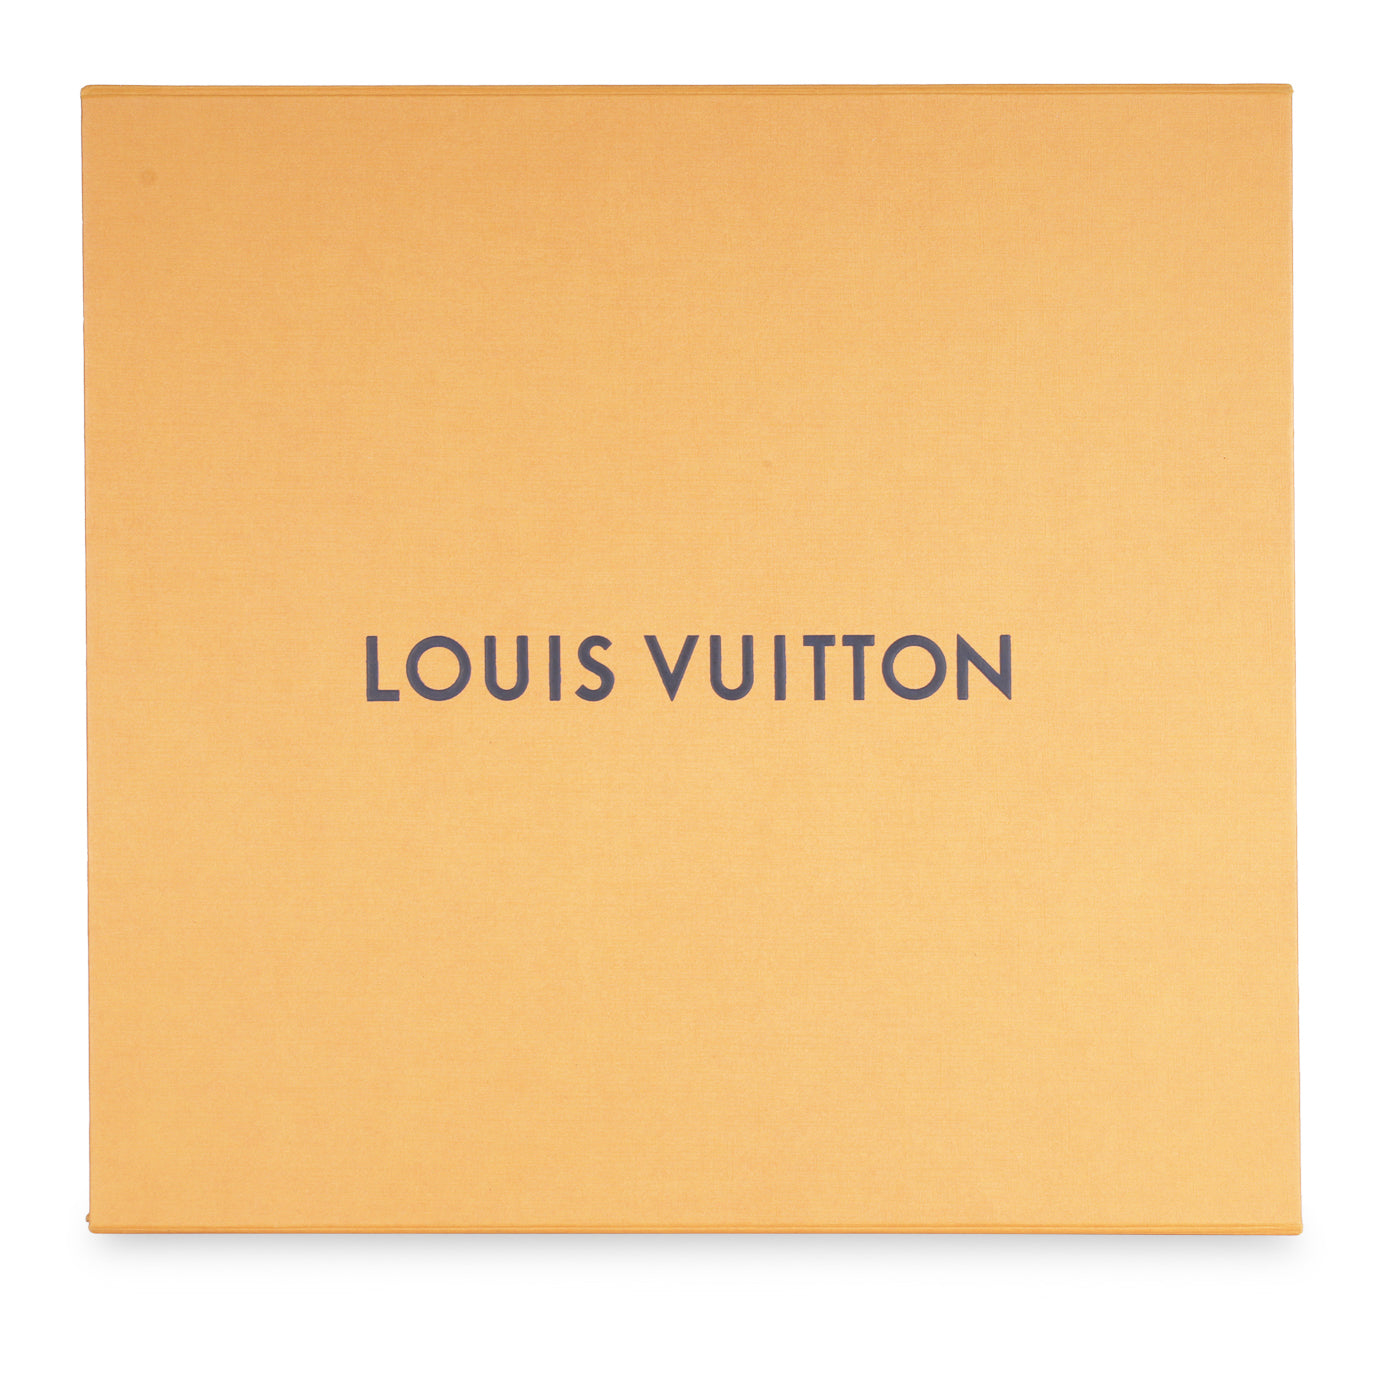 Louis Vuitton Long Wallet Empty Box Lot of 18 set